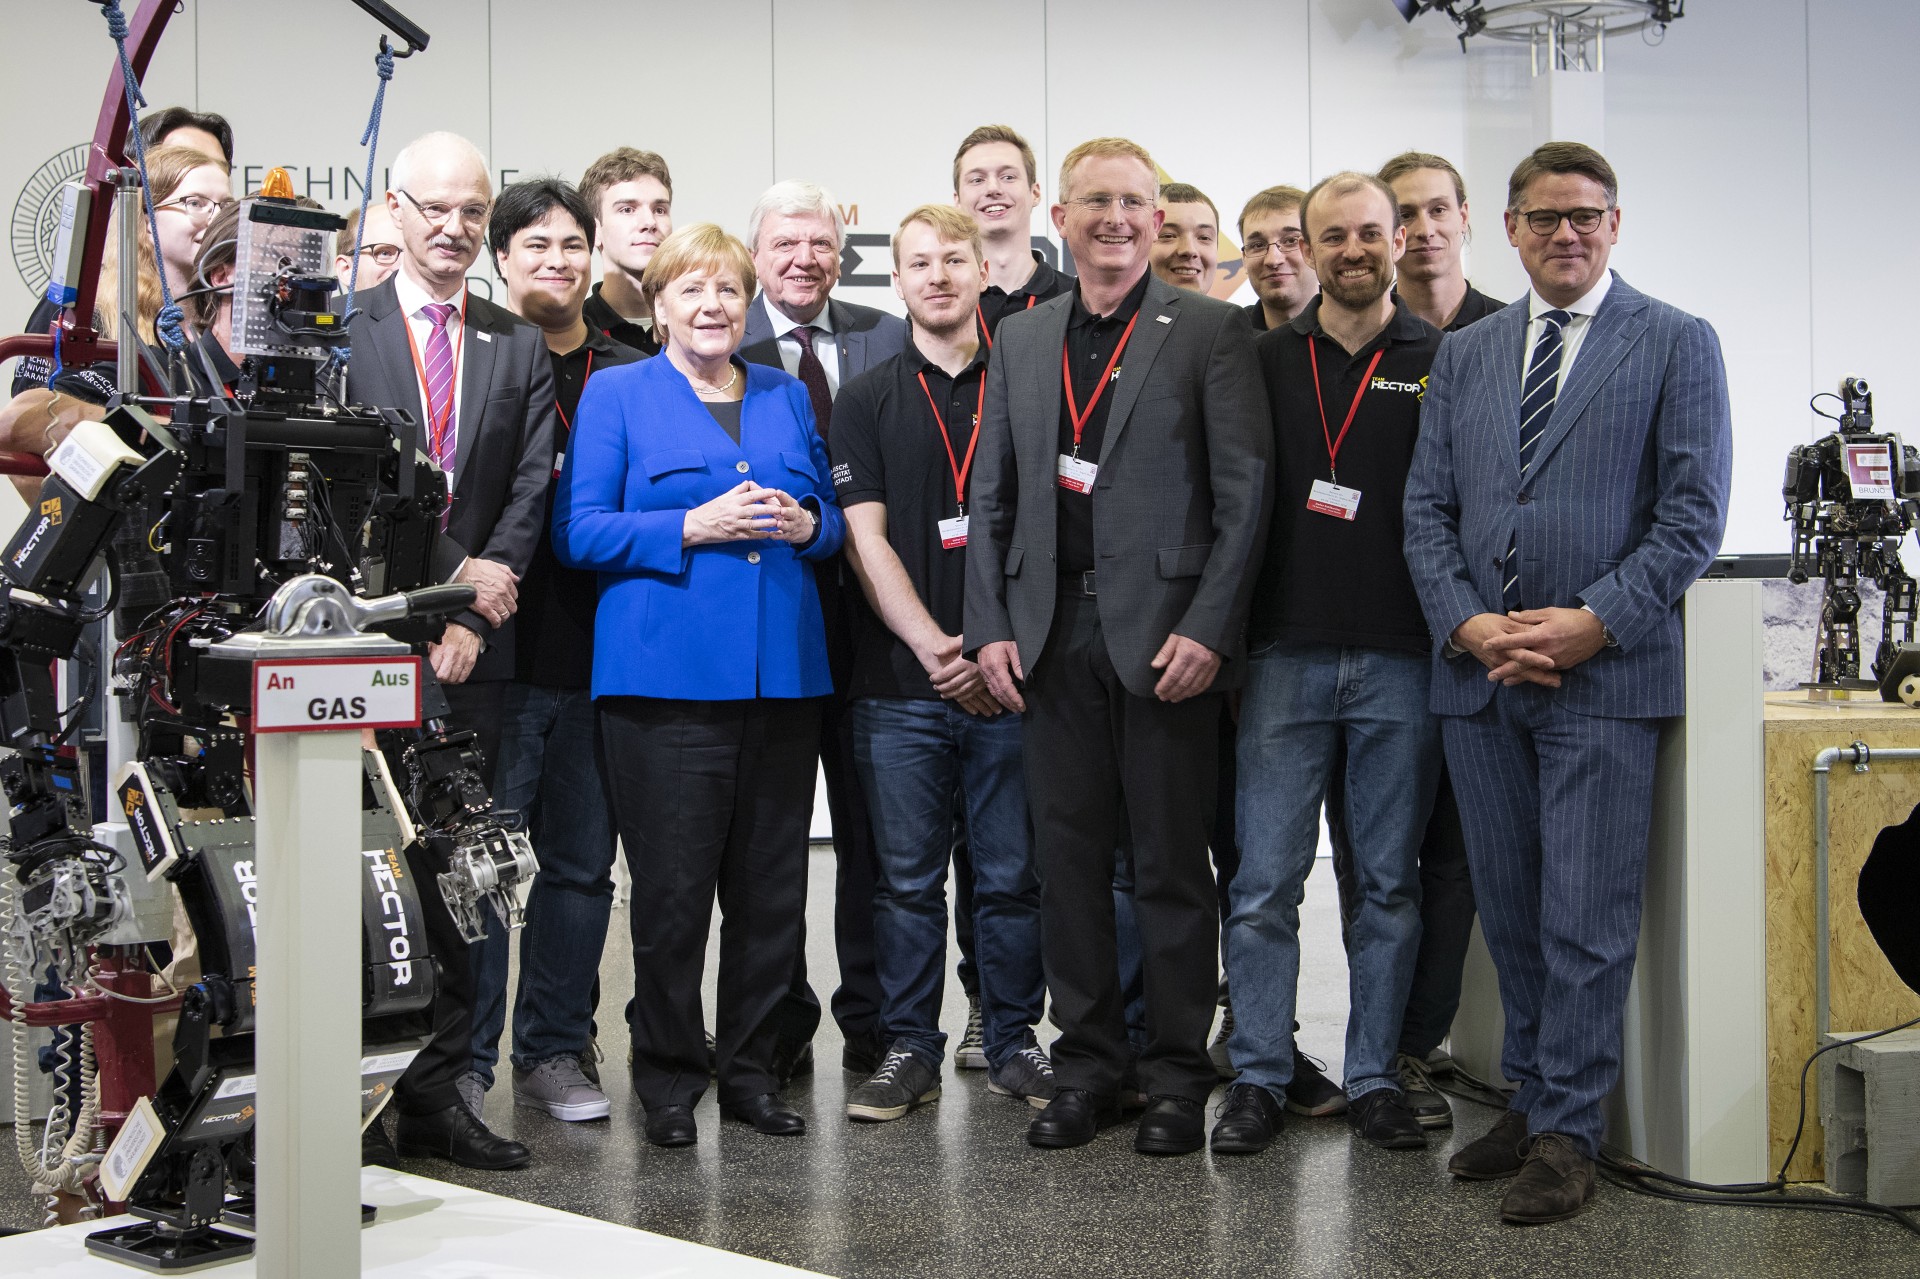 Press Photo of Team Hector with former German chancellor Angela Merkel.